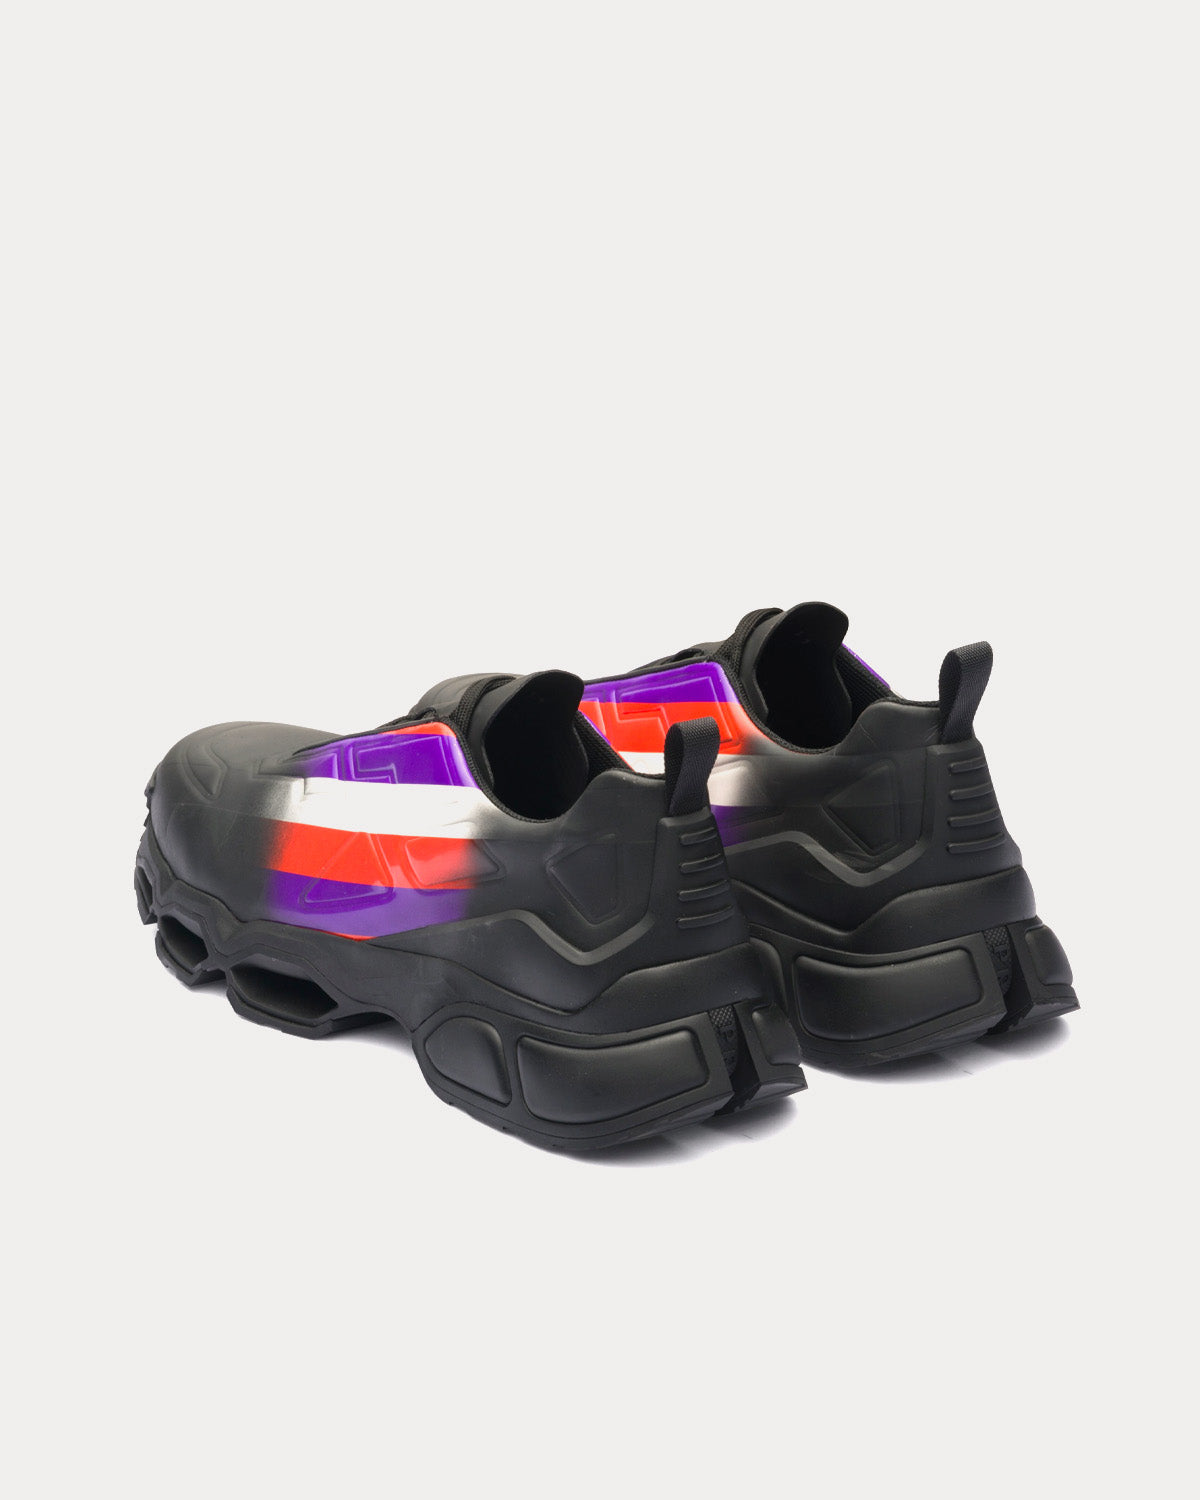 Prada - Collision Cross Violet Low Top Sneakers